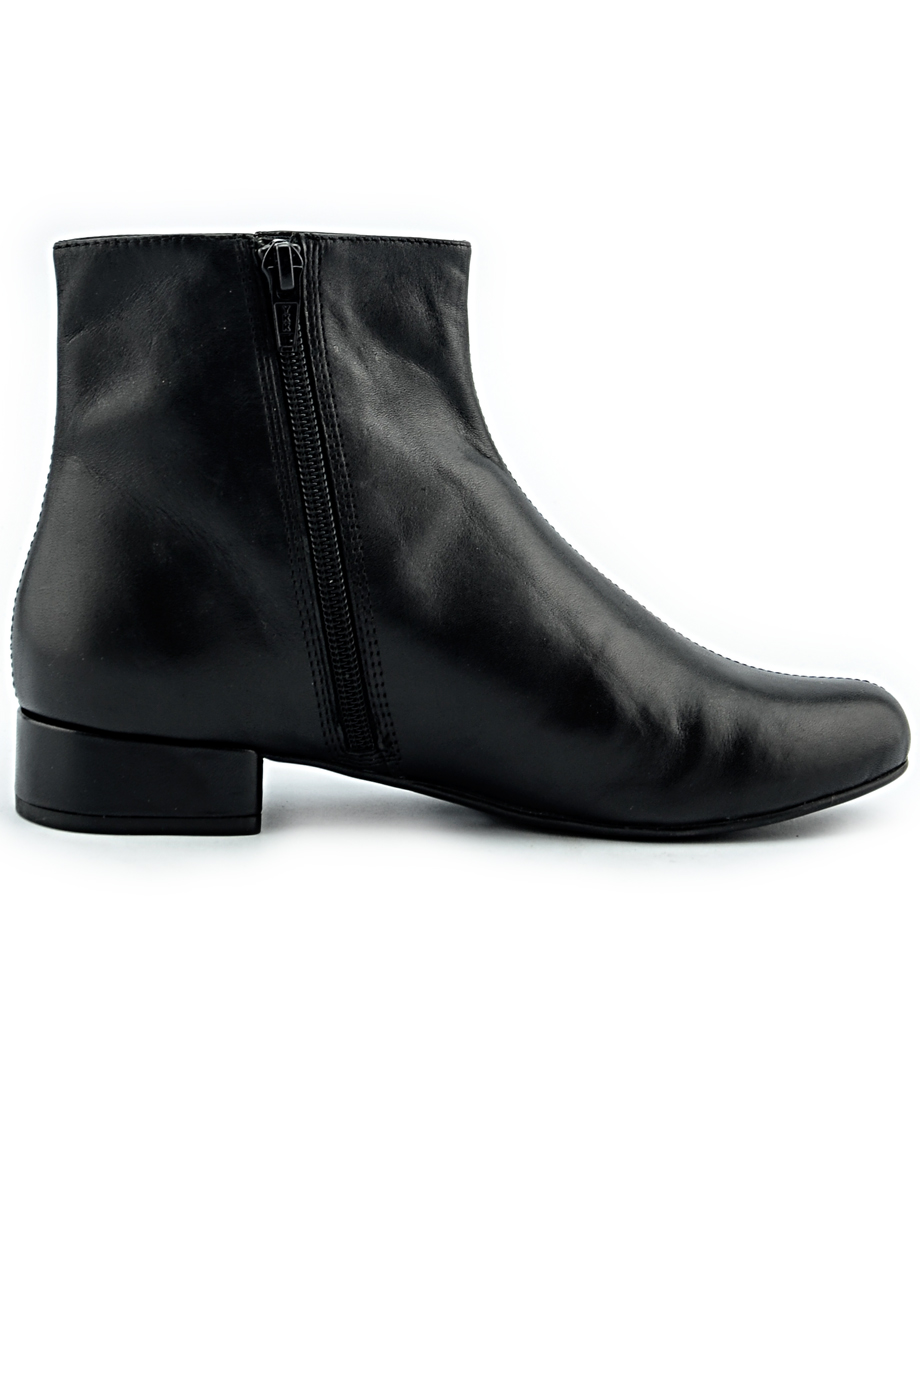 VAGABOND Sample Boots 2.5cm/ Black